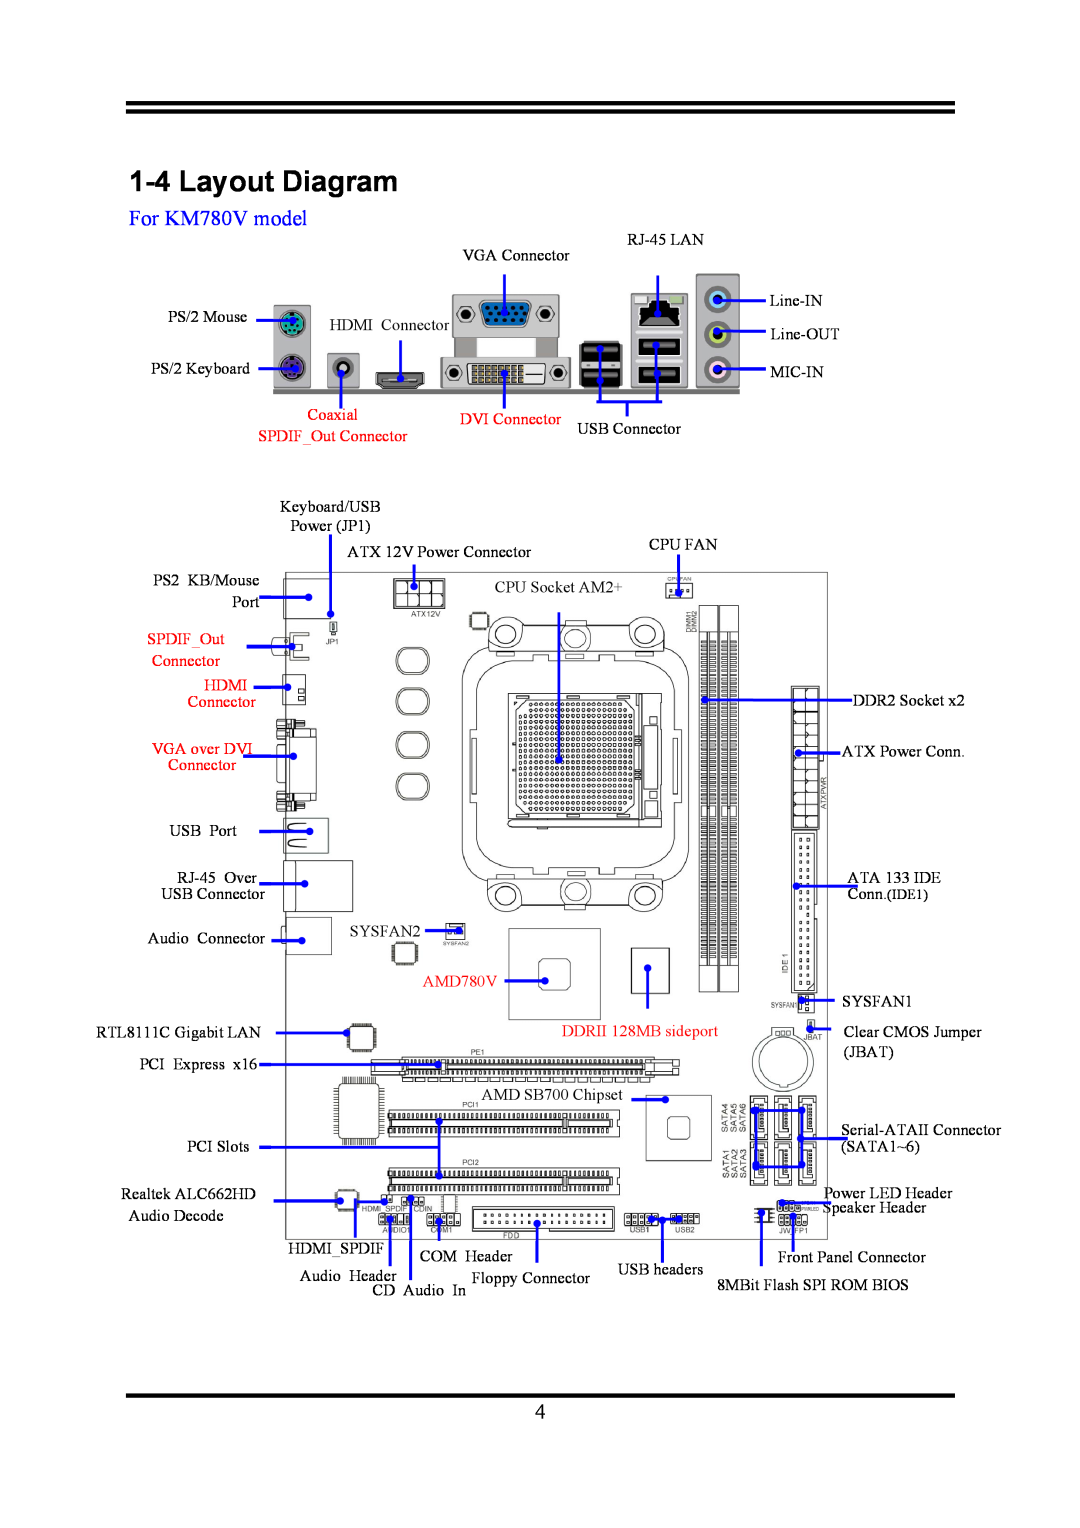 AMD user manual Layout Diagram, For KM780V model, Coaxial, DVI Connector, Hdmi, VGA over DVI, AMD780V 